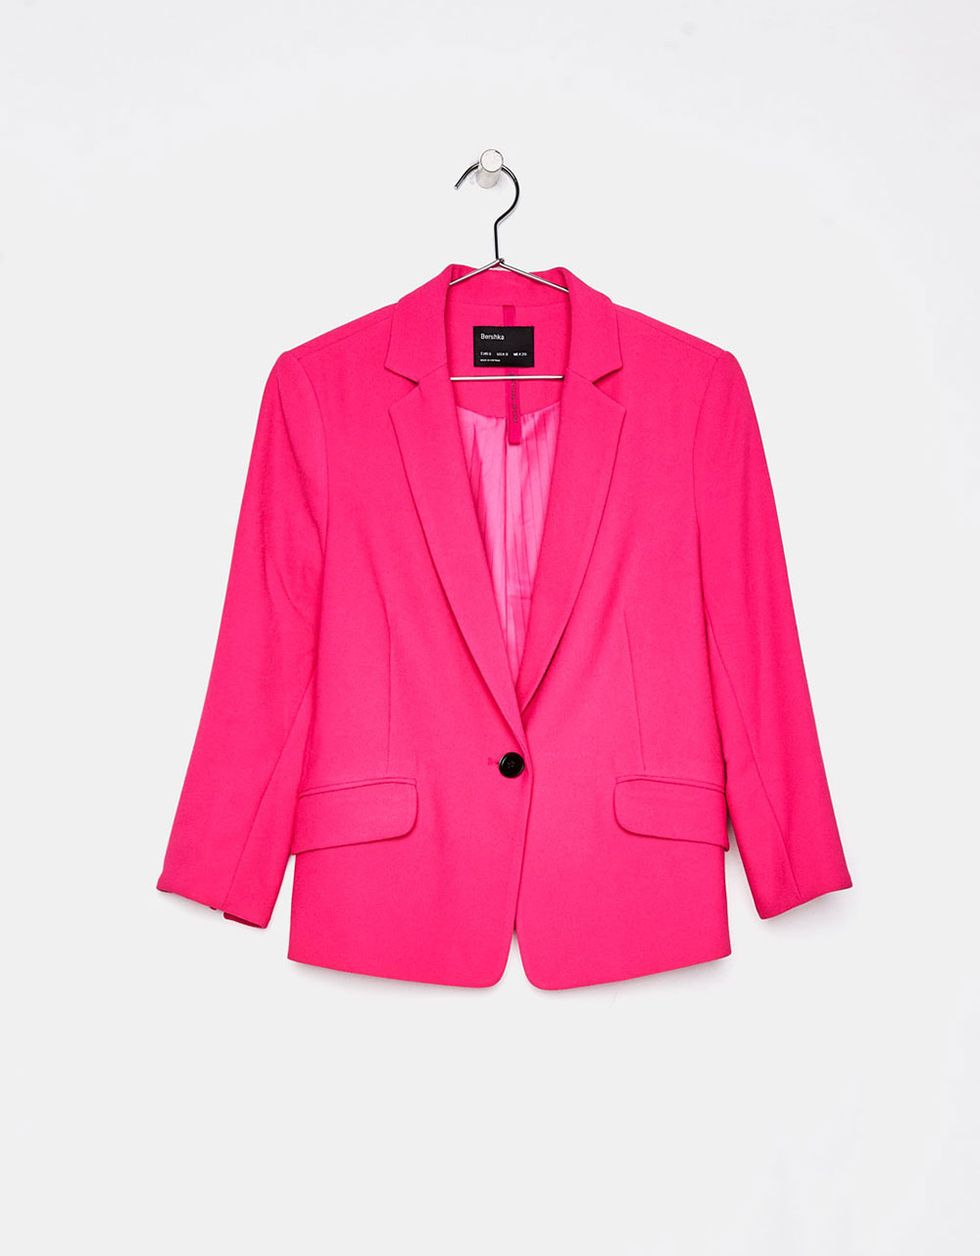 Clothing, Outerwear, Blazer, Pink, Jacket, Sleeve, Button, Magenta, Collar, Top, 